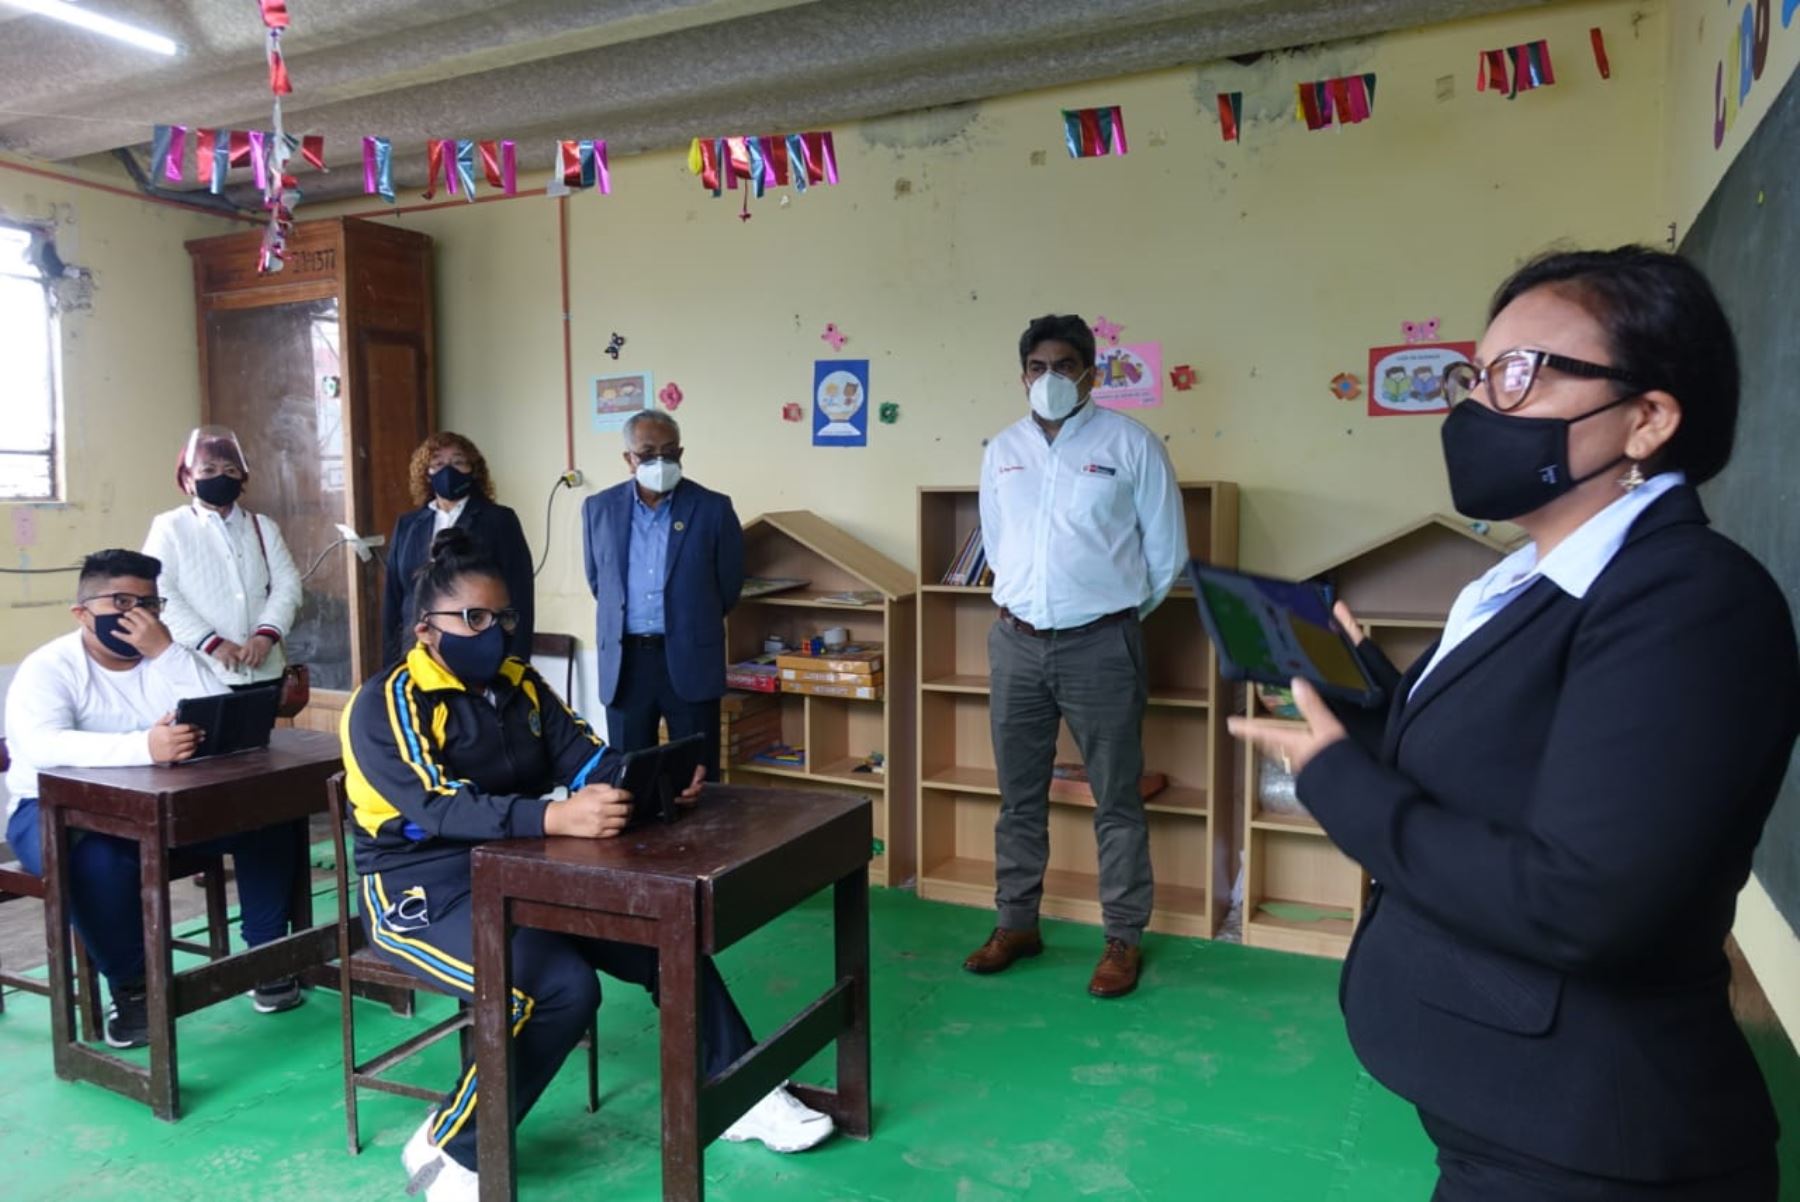 Titular de Educación inició en Chancay la entrega de 15 mil tablets a estudiantes y docentes de la zona rural de Lima. Foto: Minedu